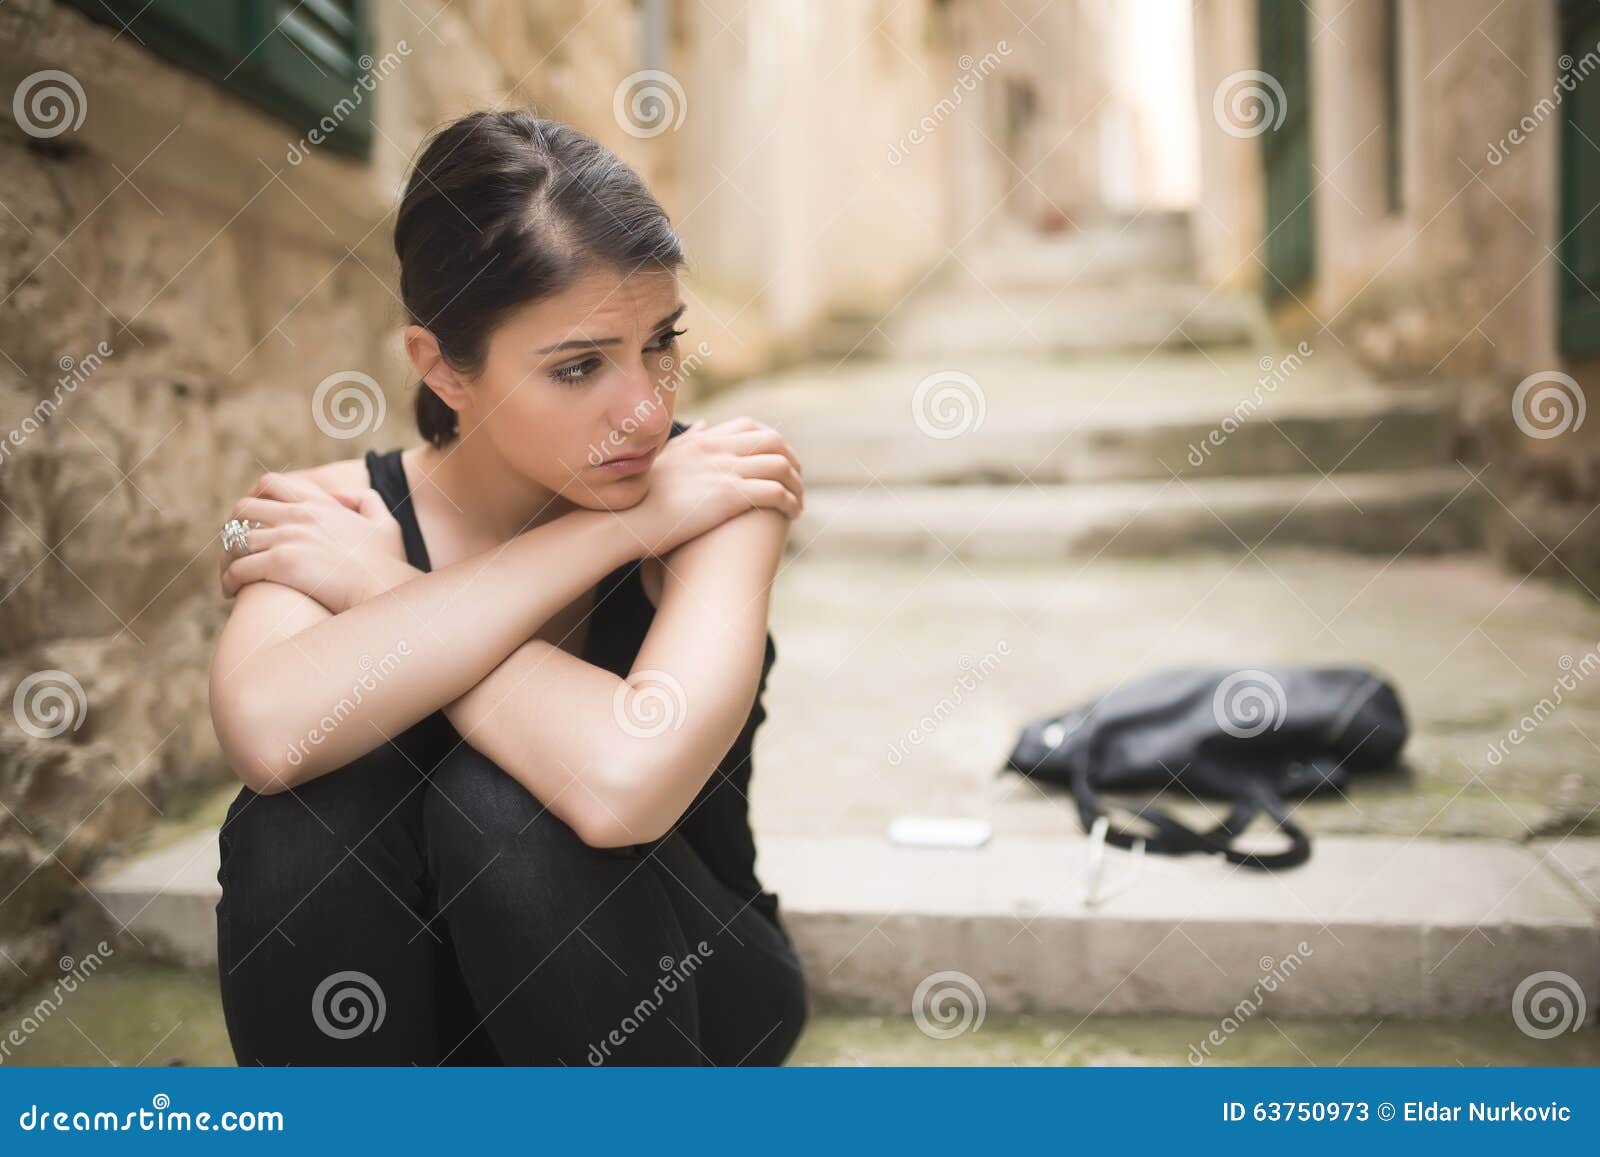 Woman with Sad Face Crying.Sad Expression,sad Emotion,despair ...